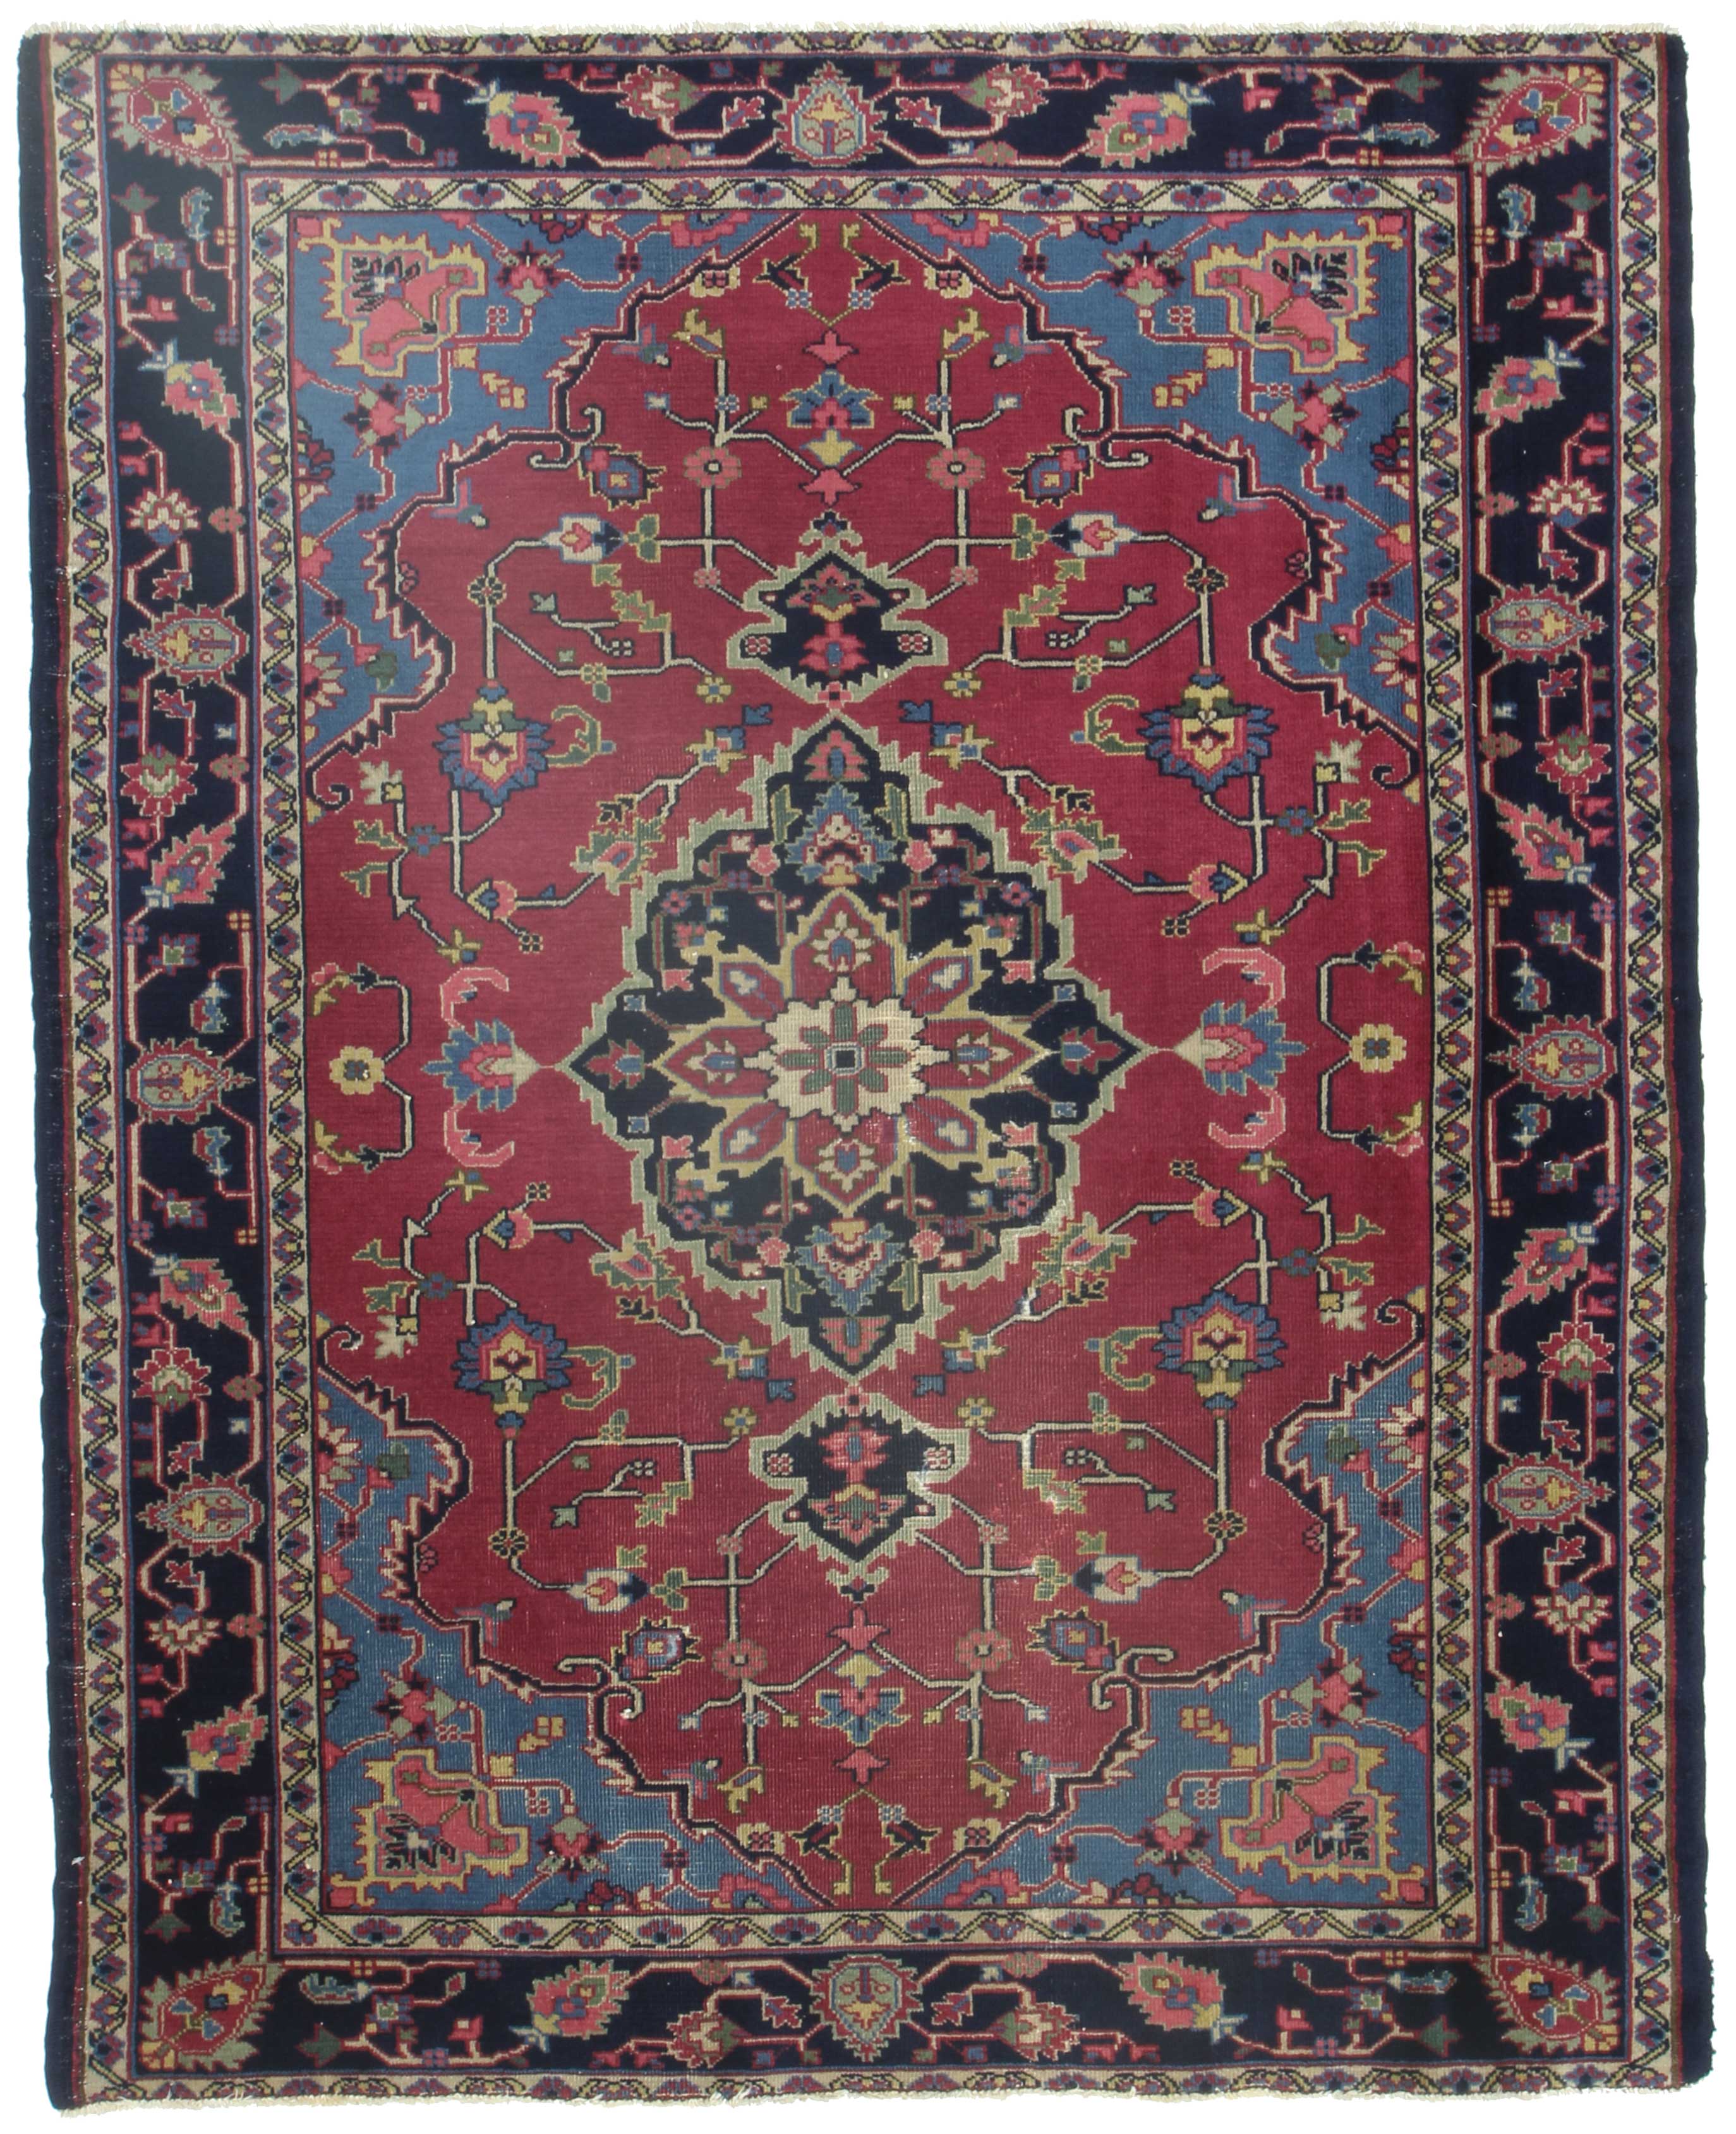 5 x 6 Antique Turkish | Exclusive Oriental Rugs